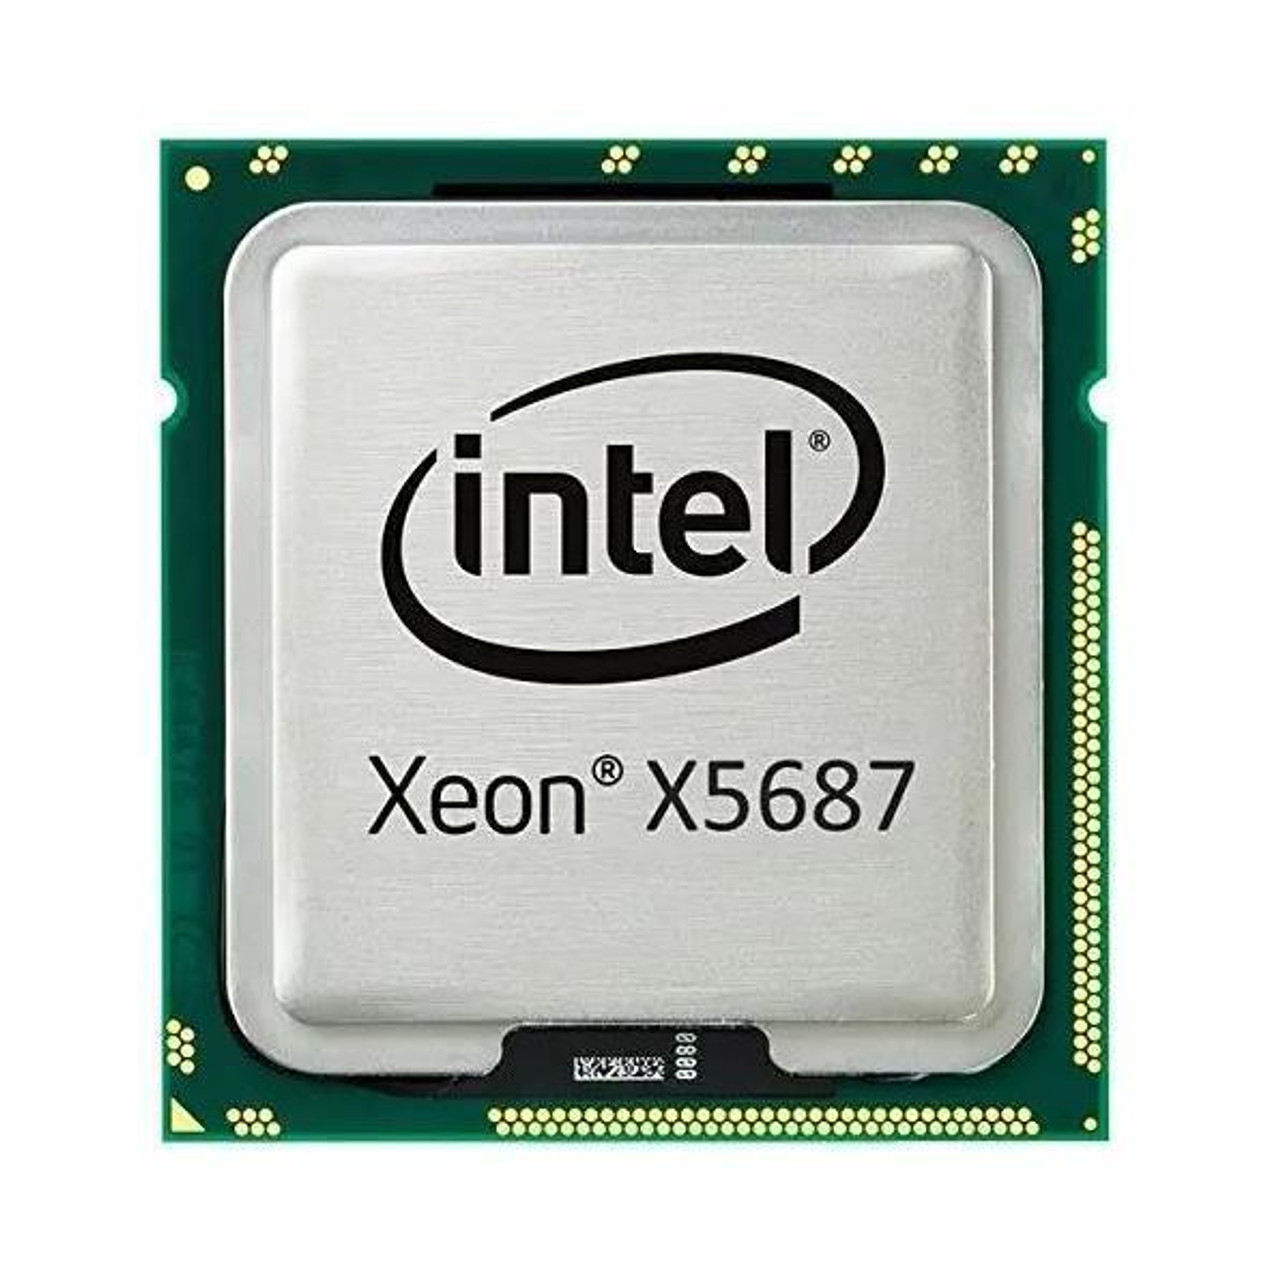 SL8V7 Intel Xeon X5687 Quad Core 3.60GHz 6.40GT/s QPI 12MB L3 Cache Processor